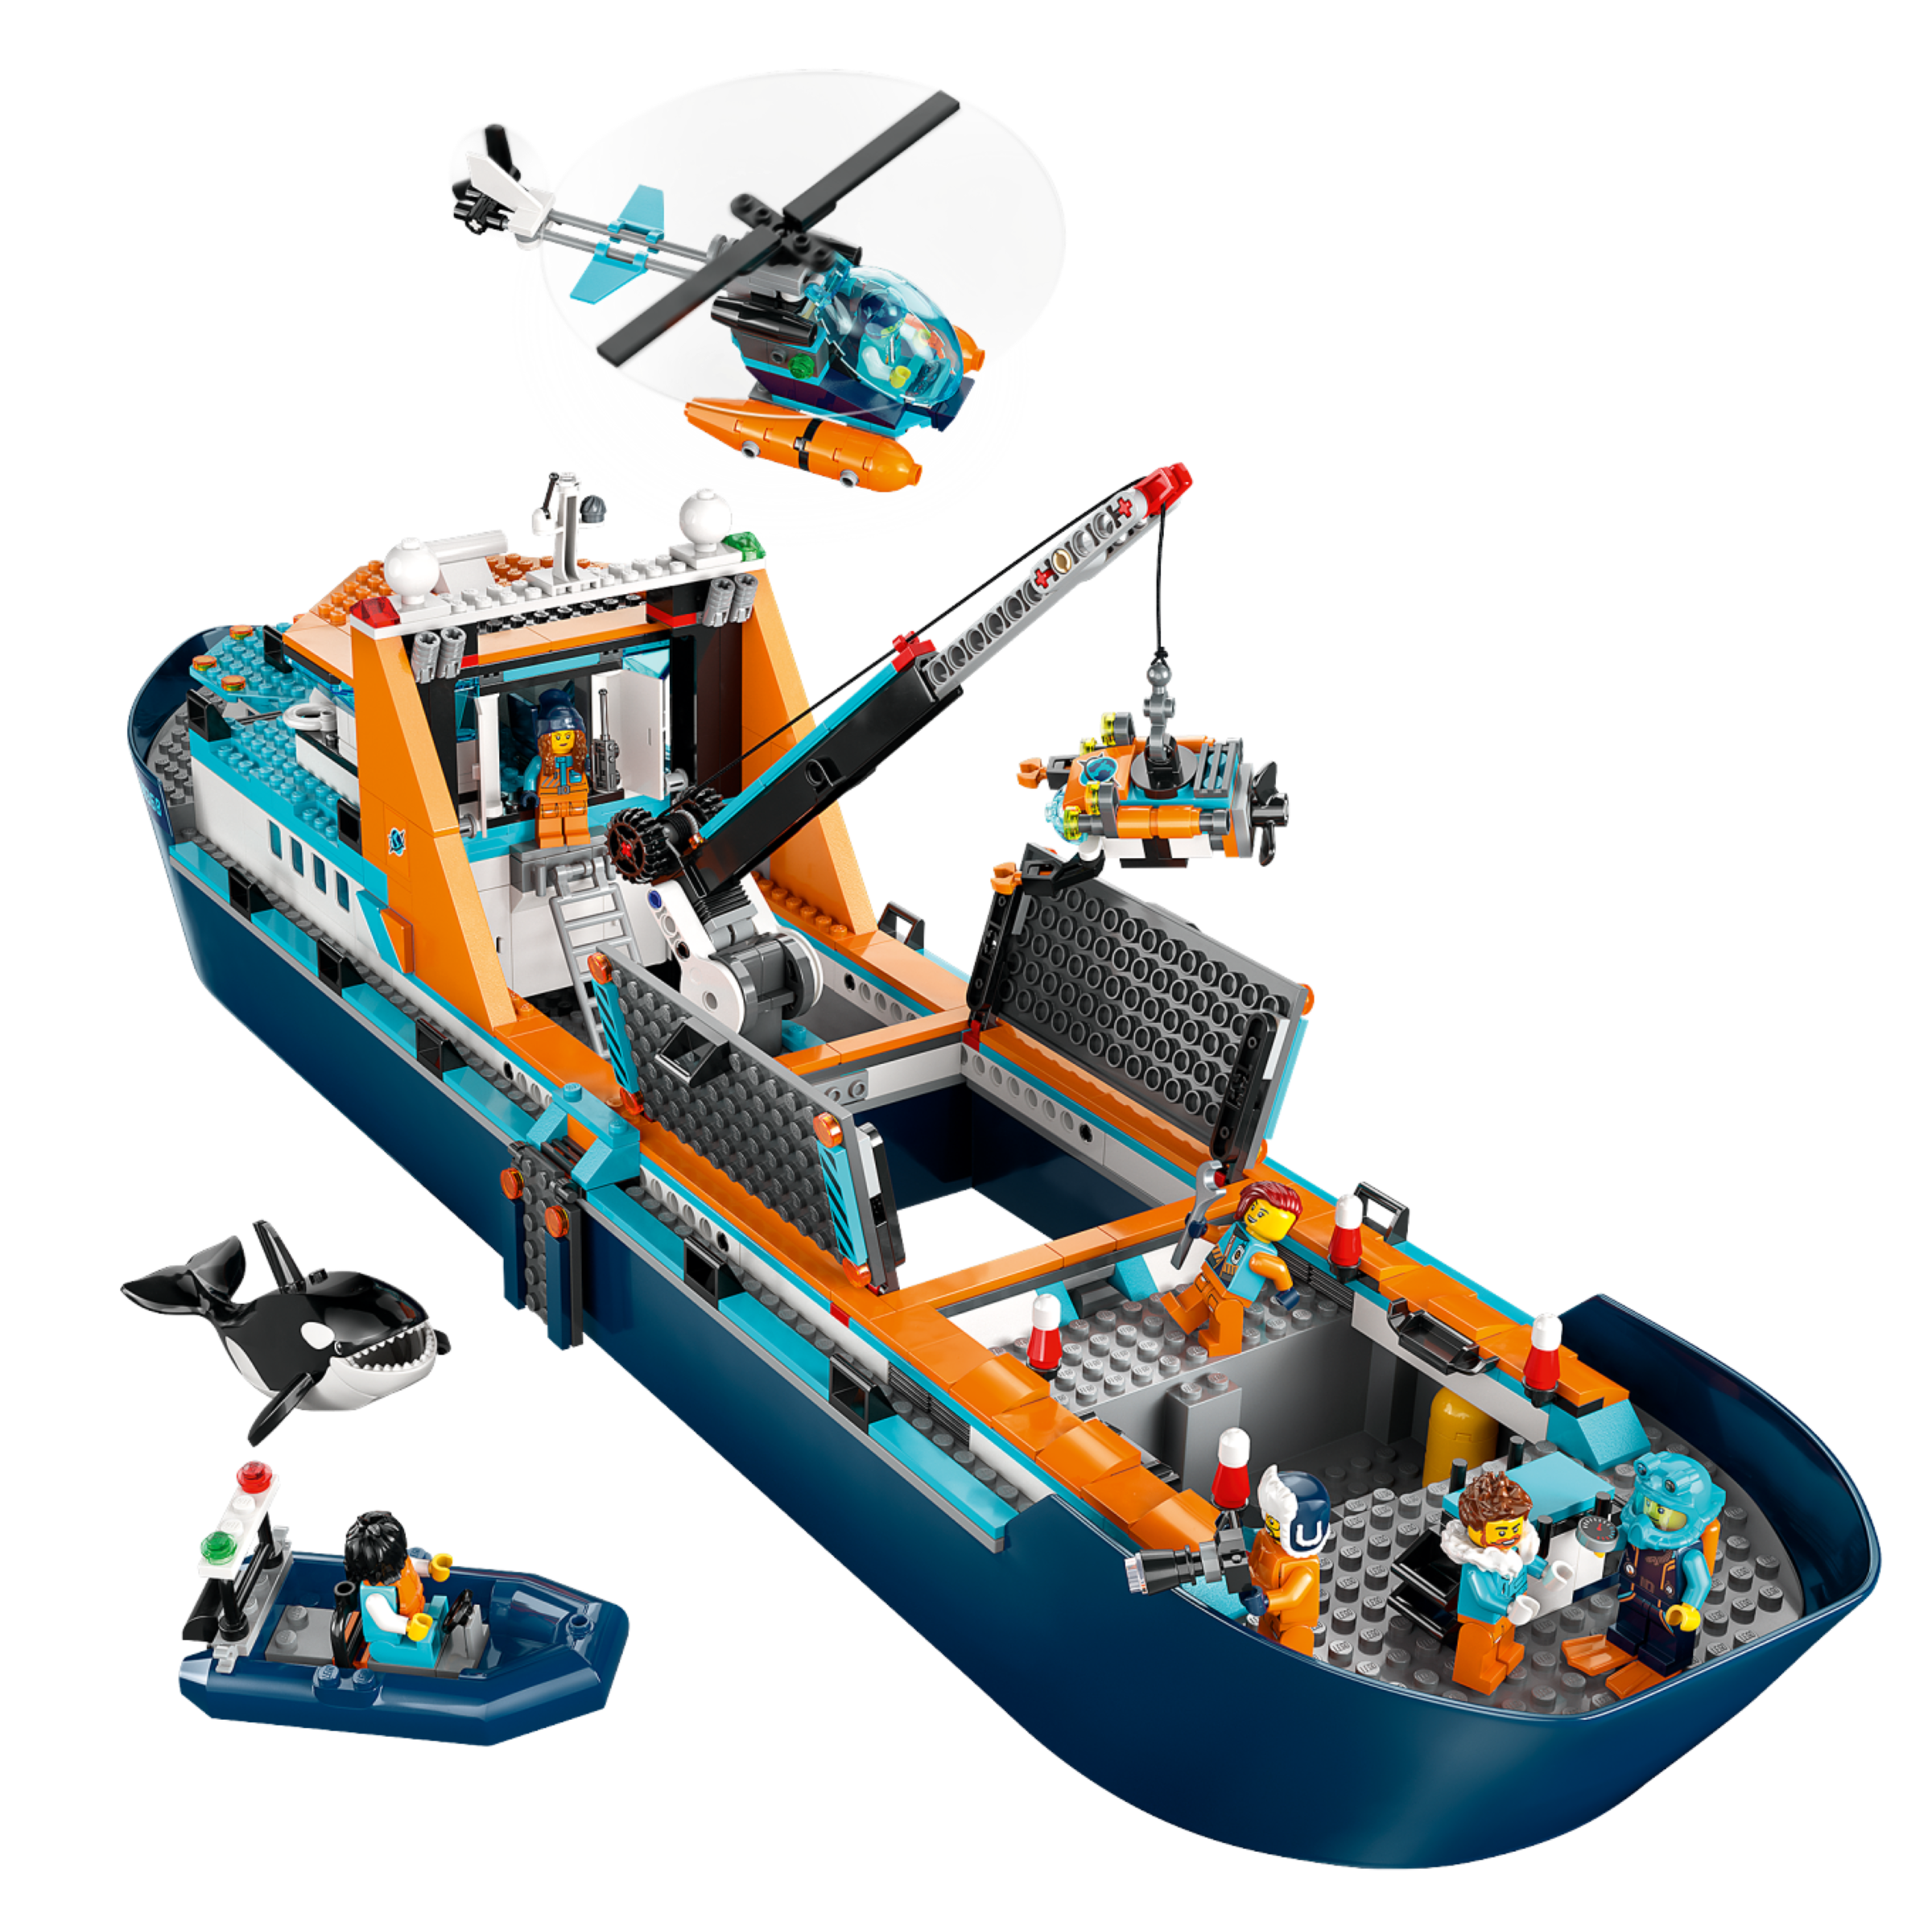 Arctic Explorer Ship 60368 | City | Buy online at the Official LEGO® Shop US